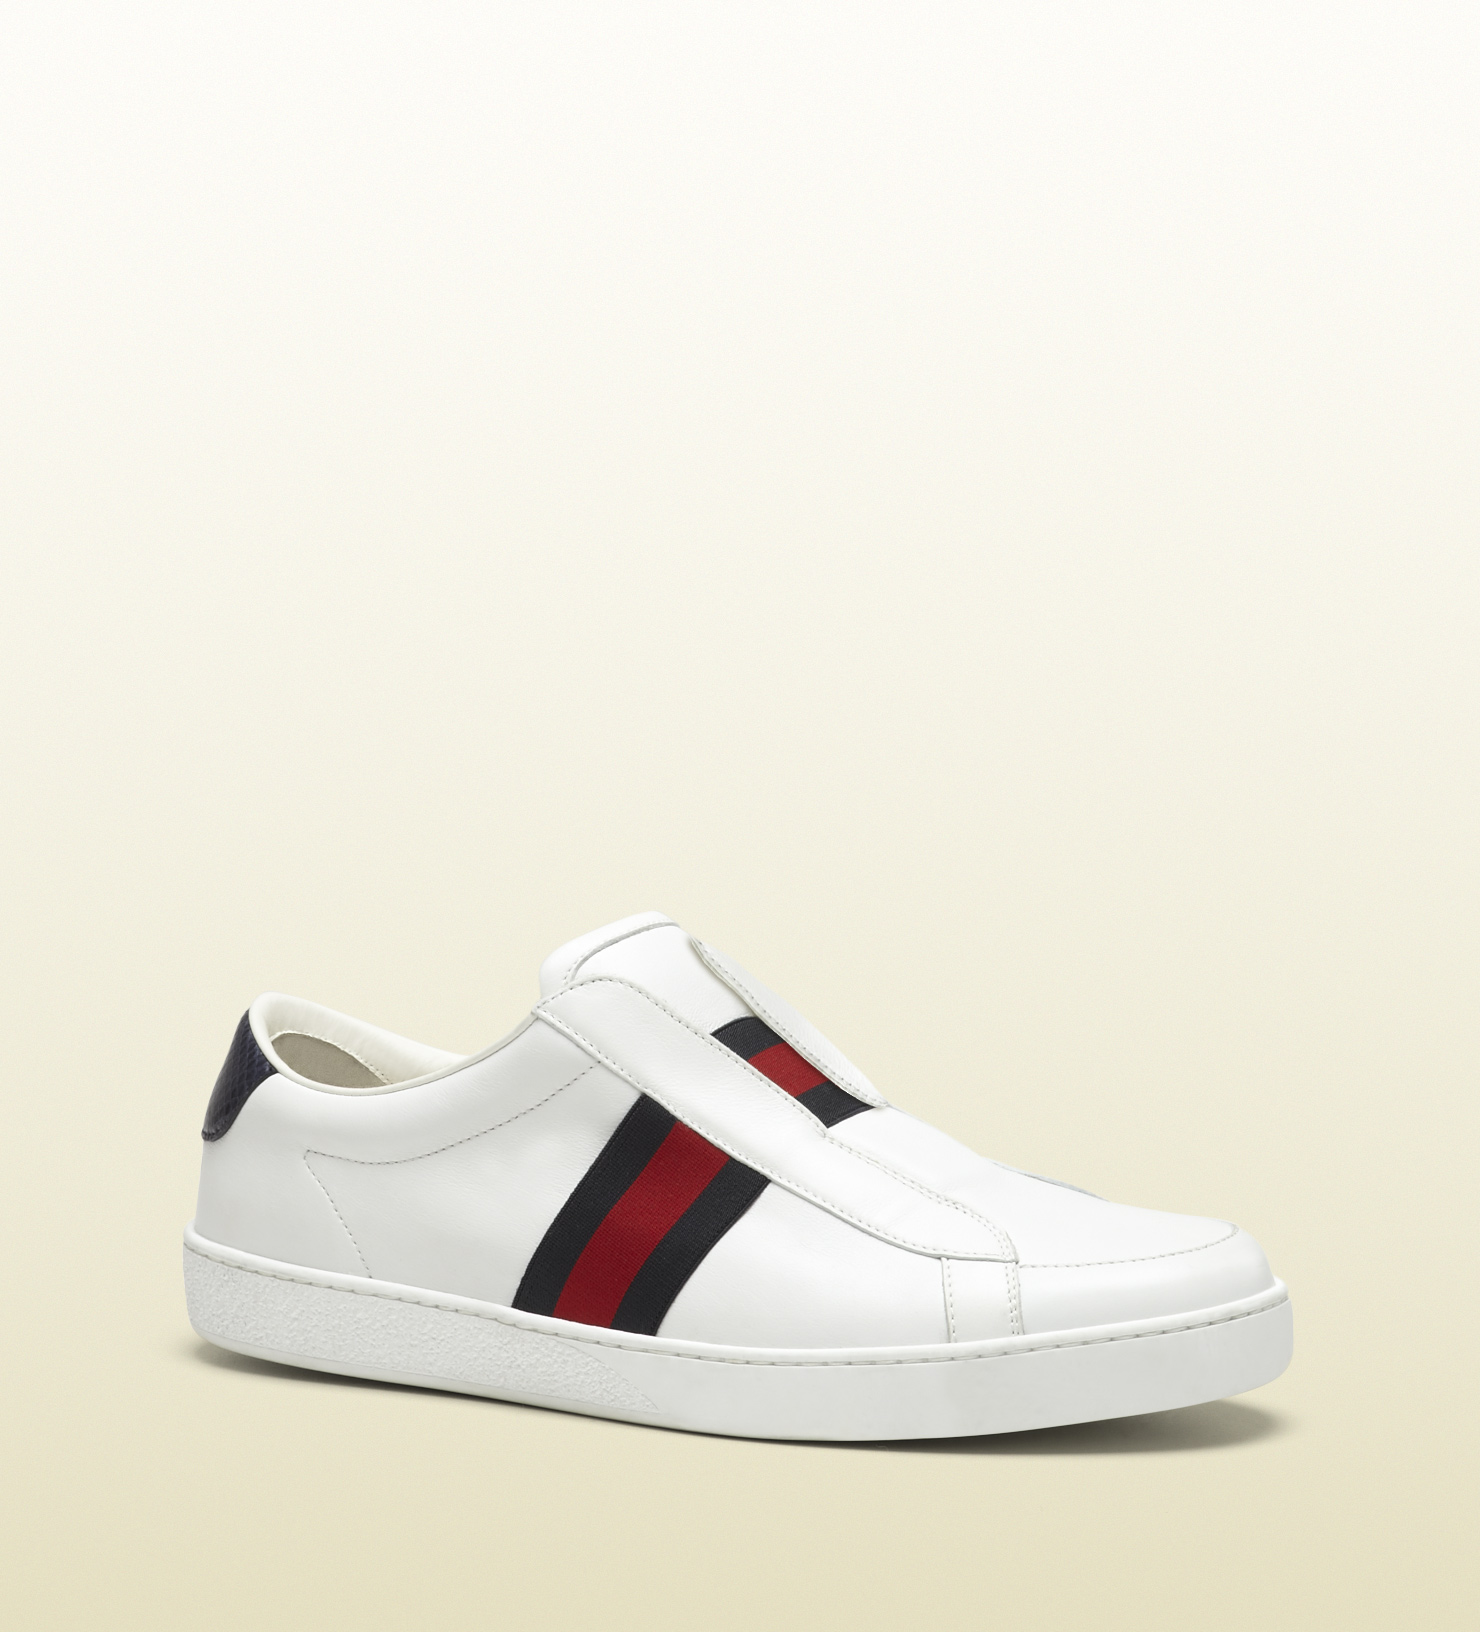 Gucci White Leather Slip-on Sneaker for Men - Lyst